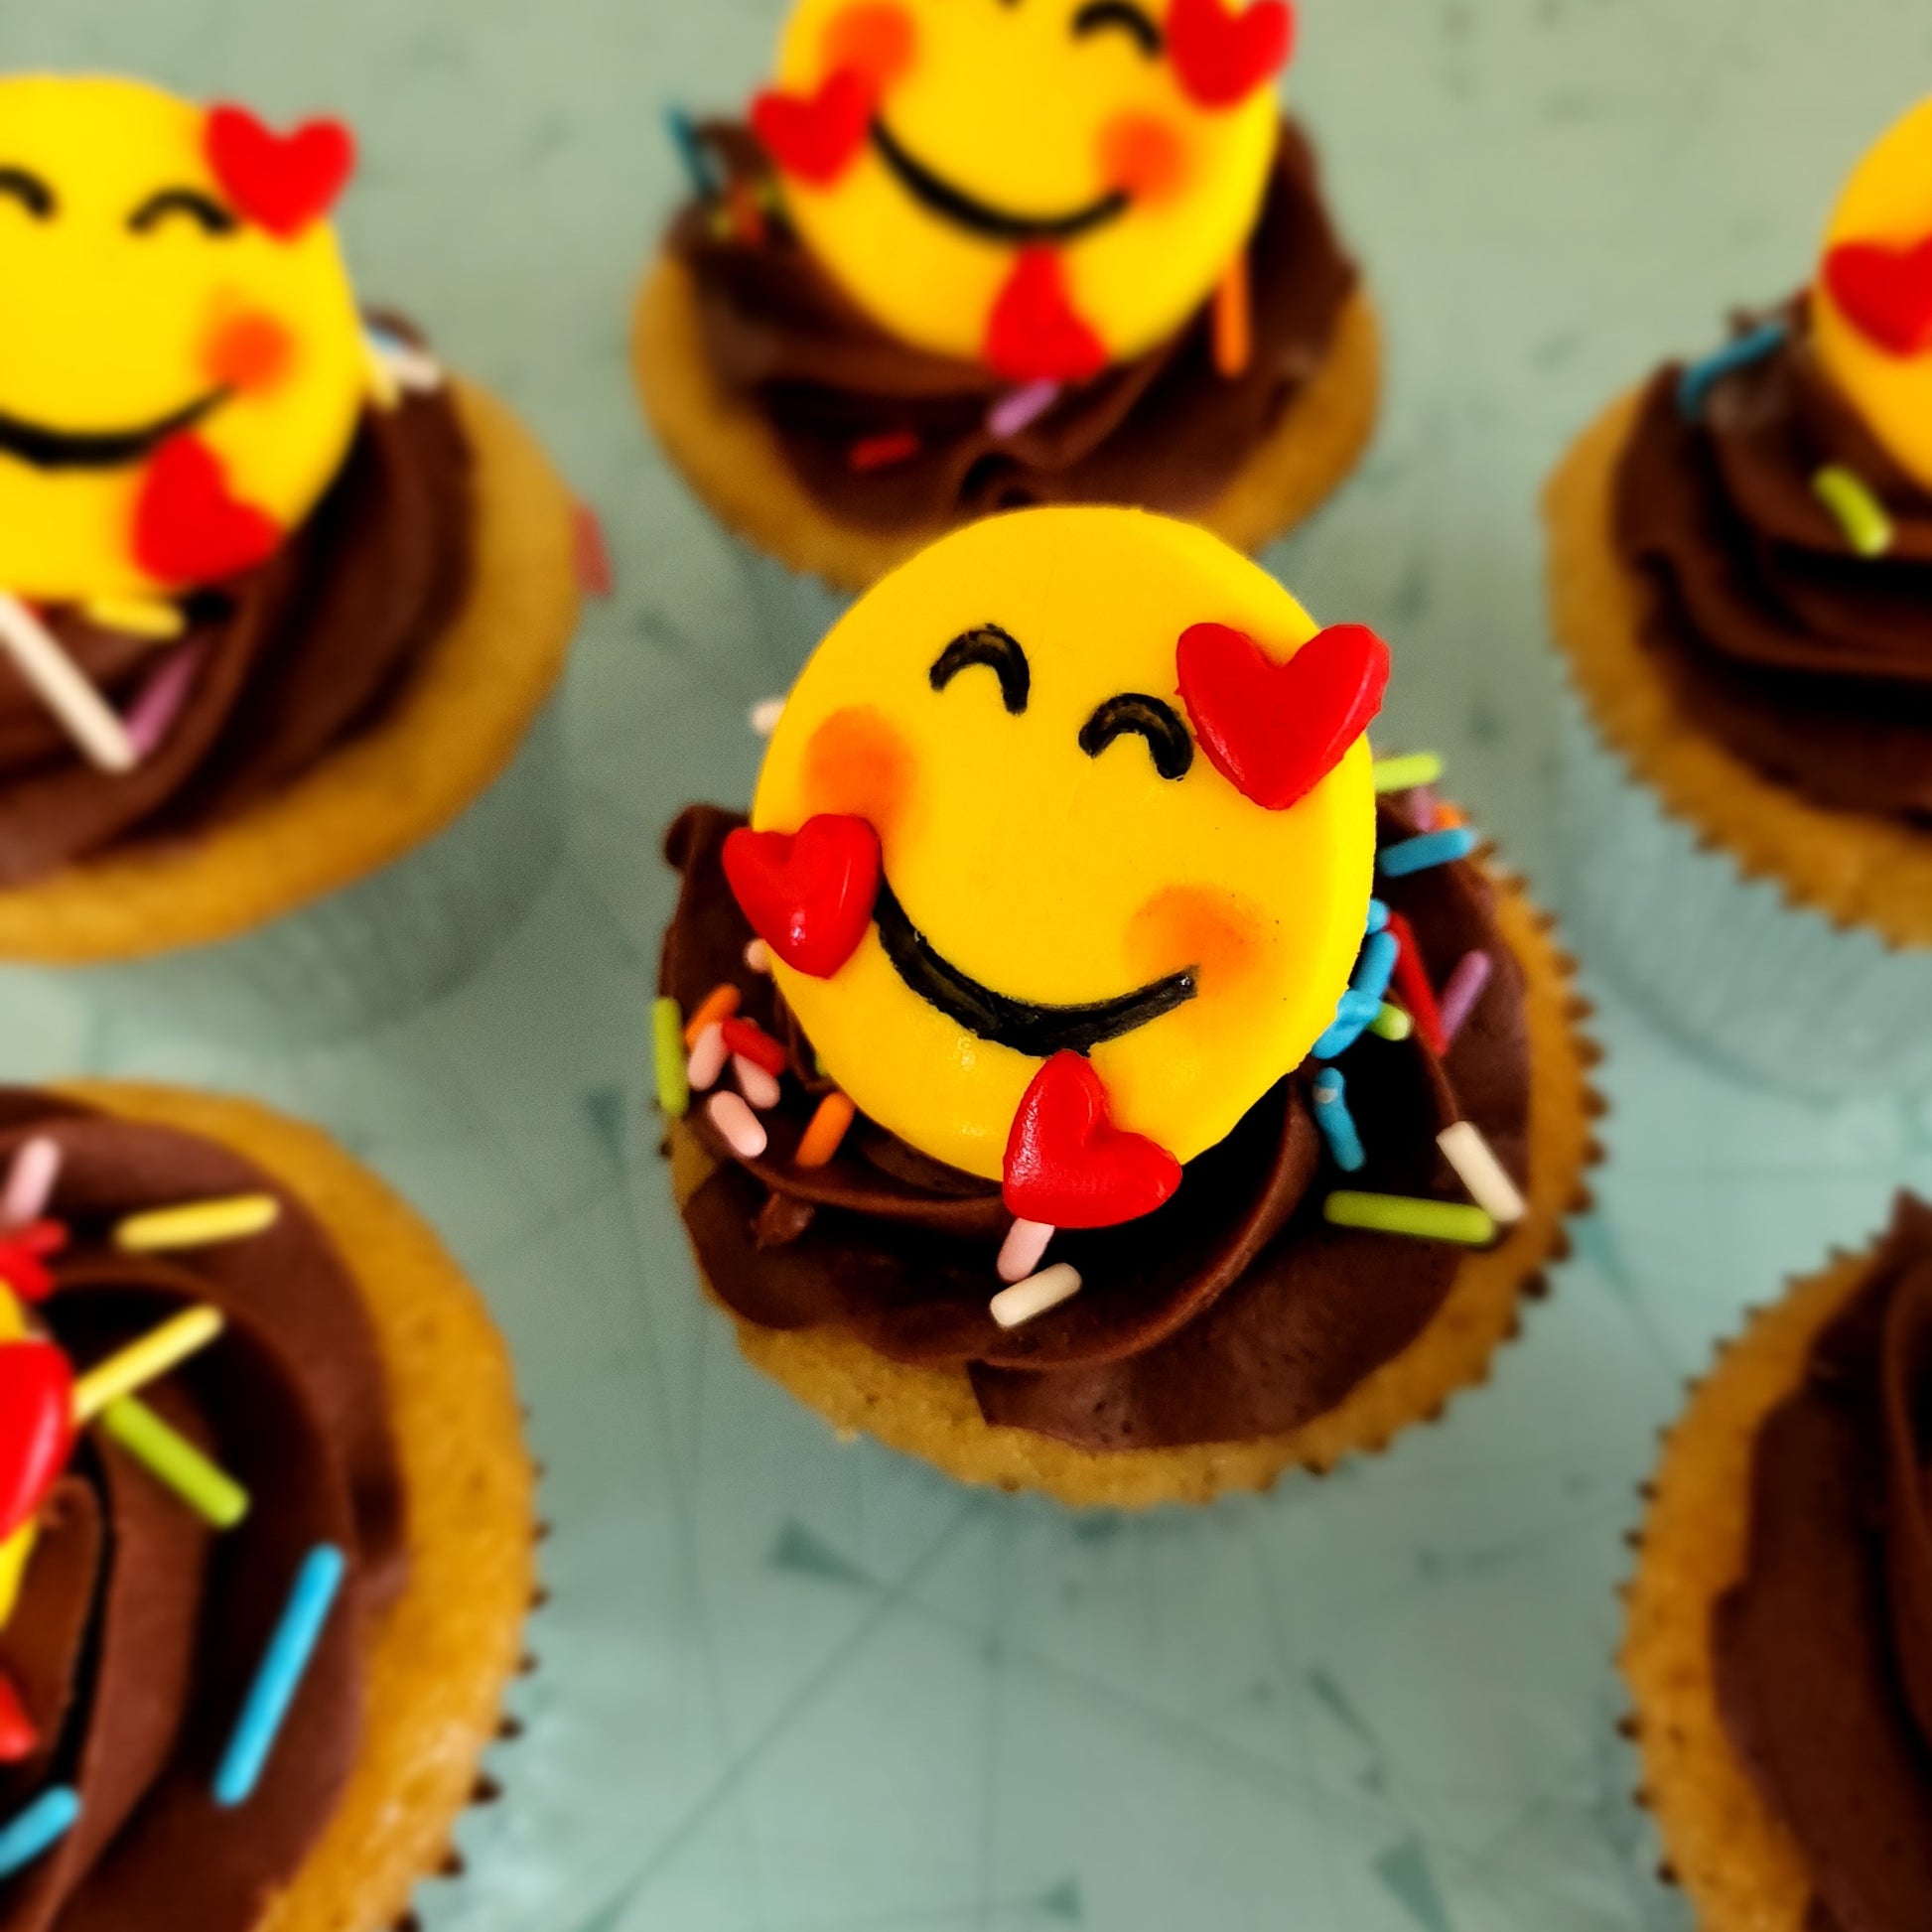 Several emoji DIY cupcakes from decorating kit.  Grateful, thankful, bashful emoji.